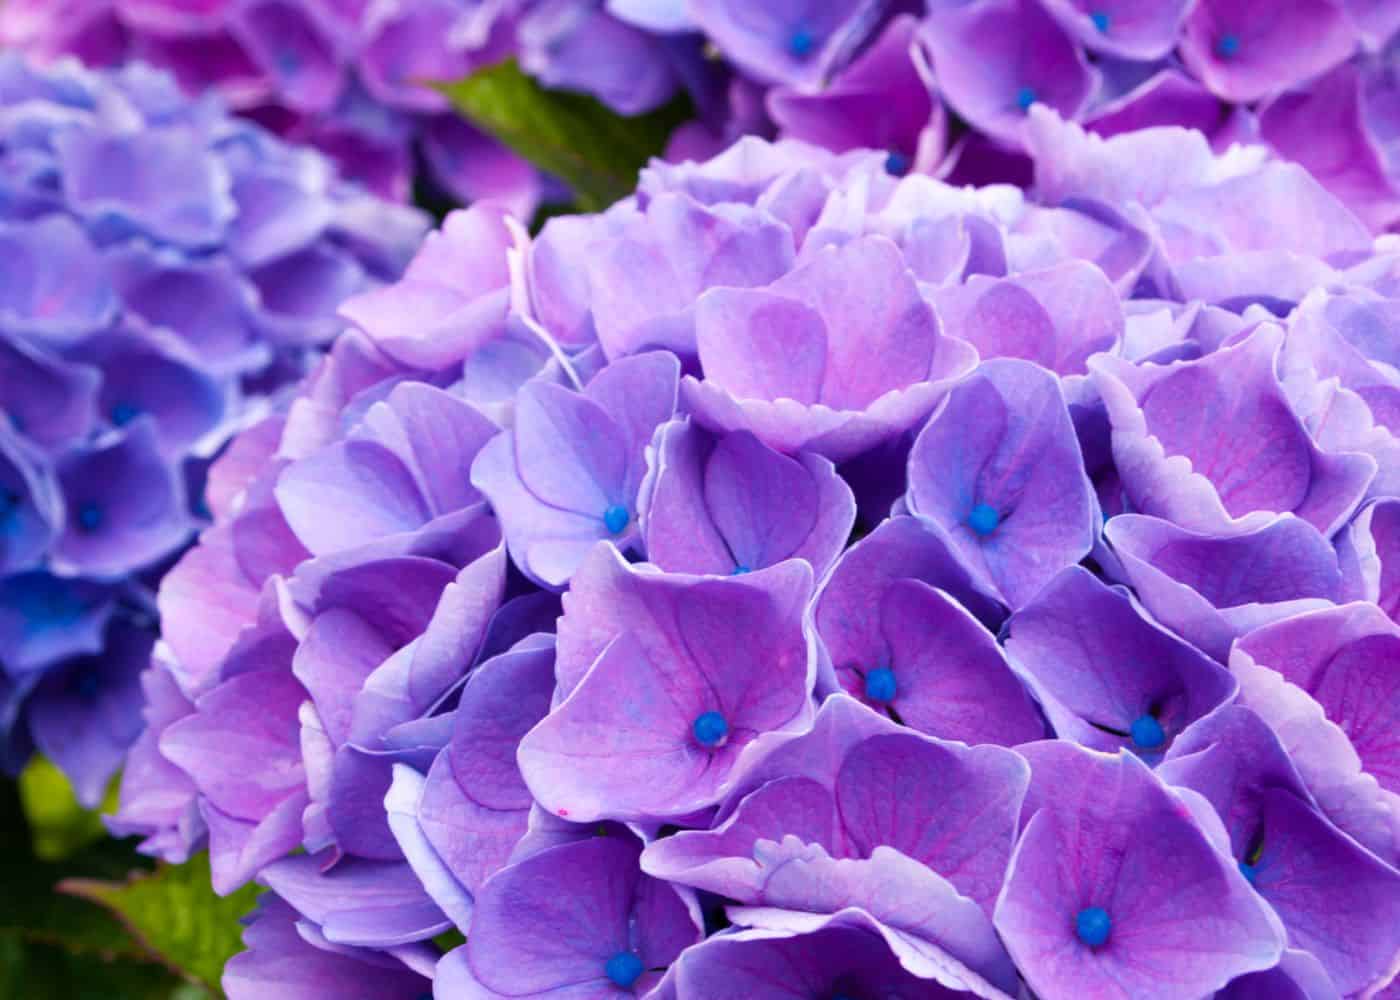 How to turn hydrangeas purple